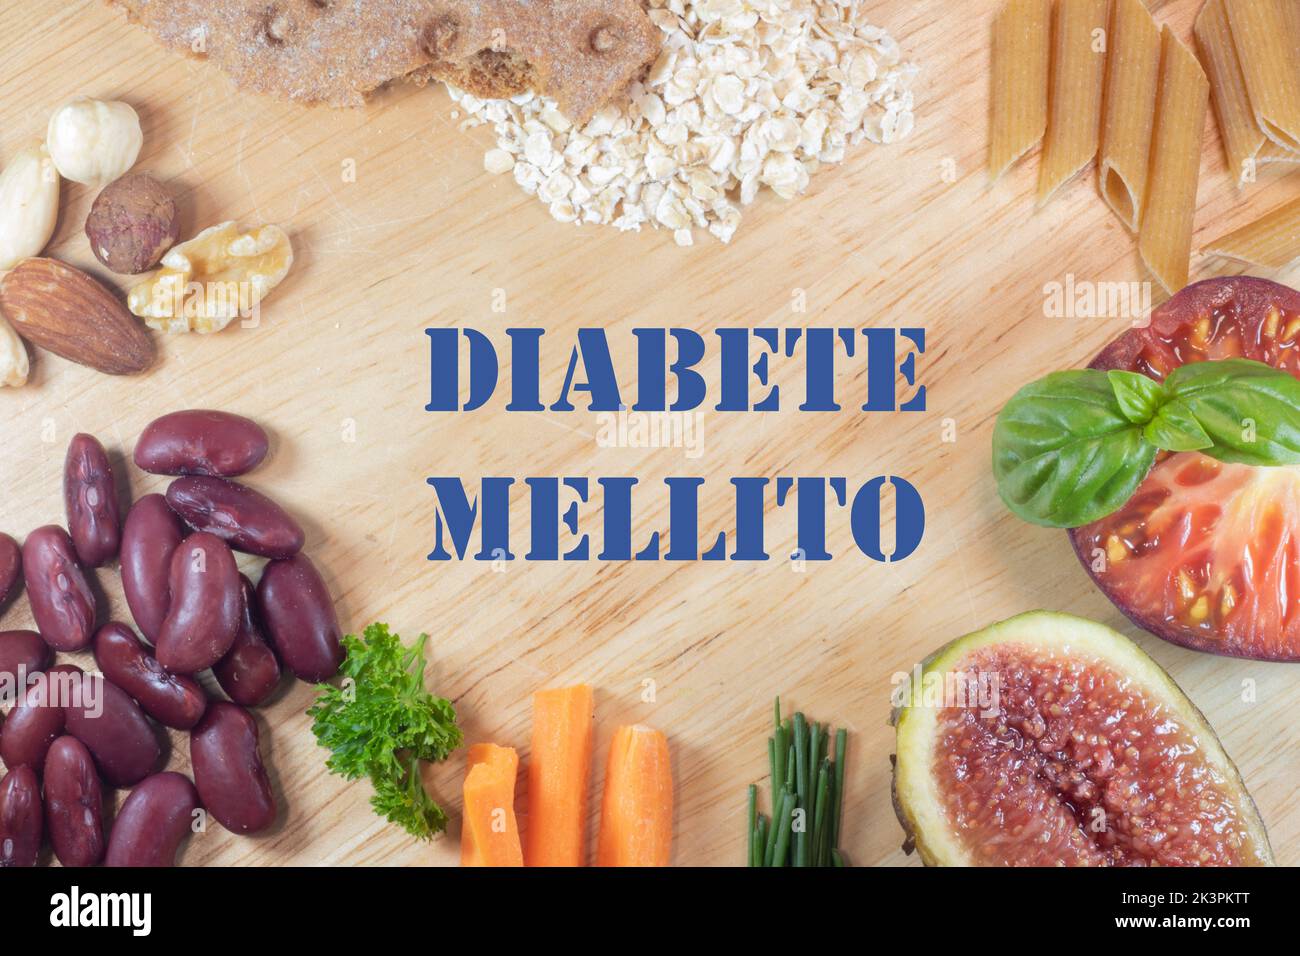 diabetes mellitus. Low sugar, high fiber, protein foods Stock Photo